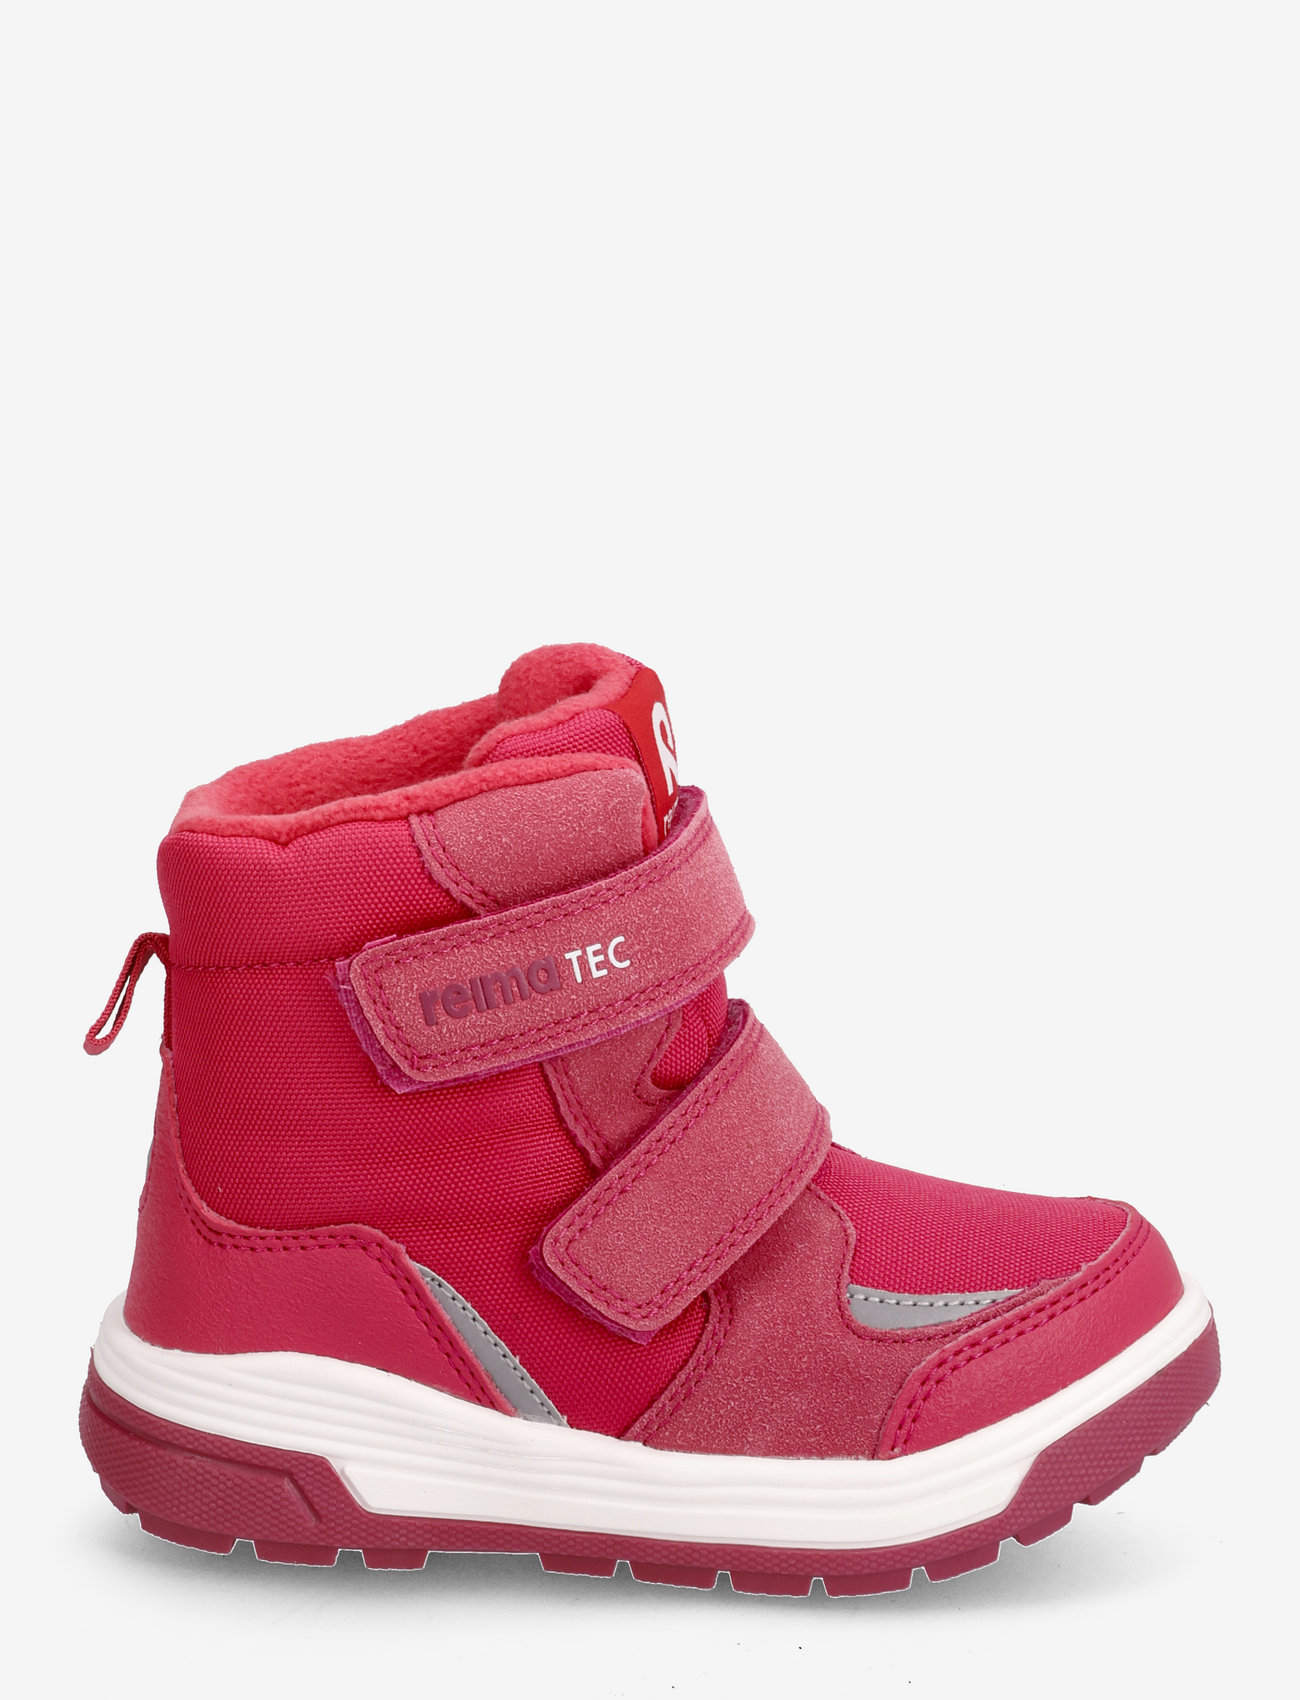 Reima - Reimatec shoes, Qing - kinder - azalea pink - 1